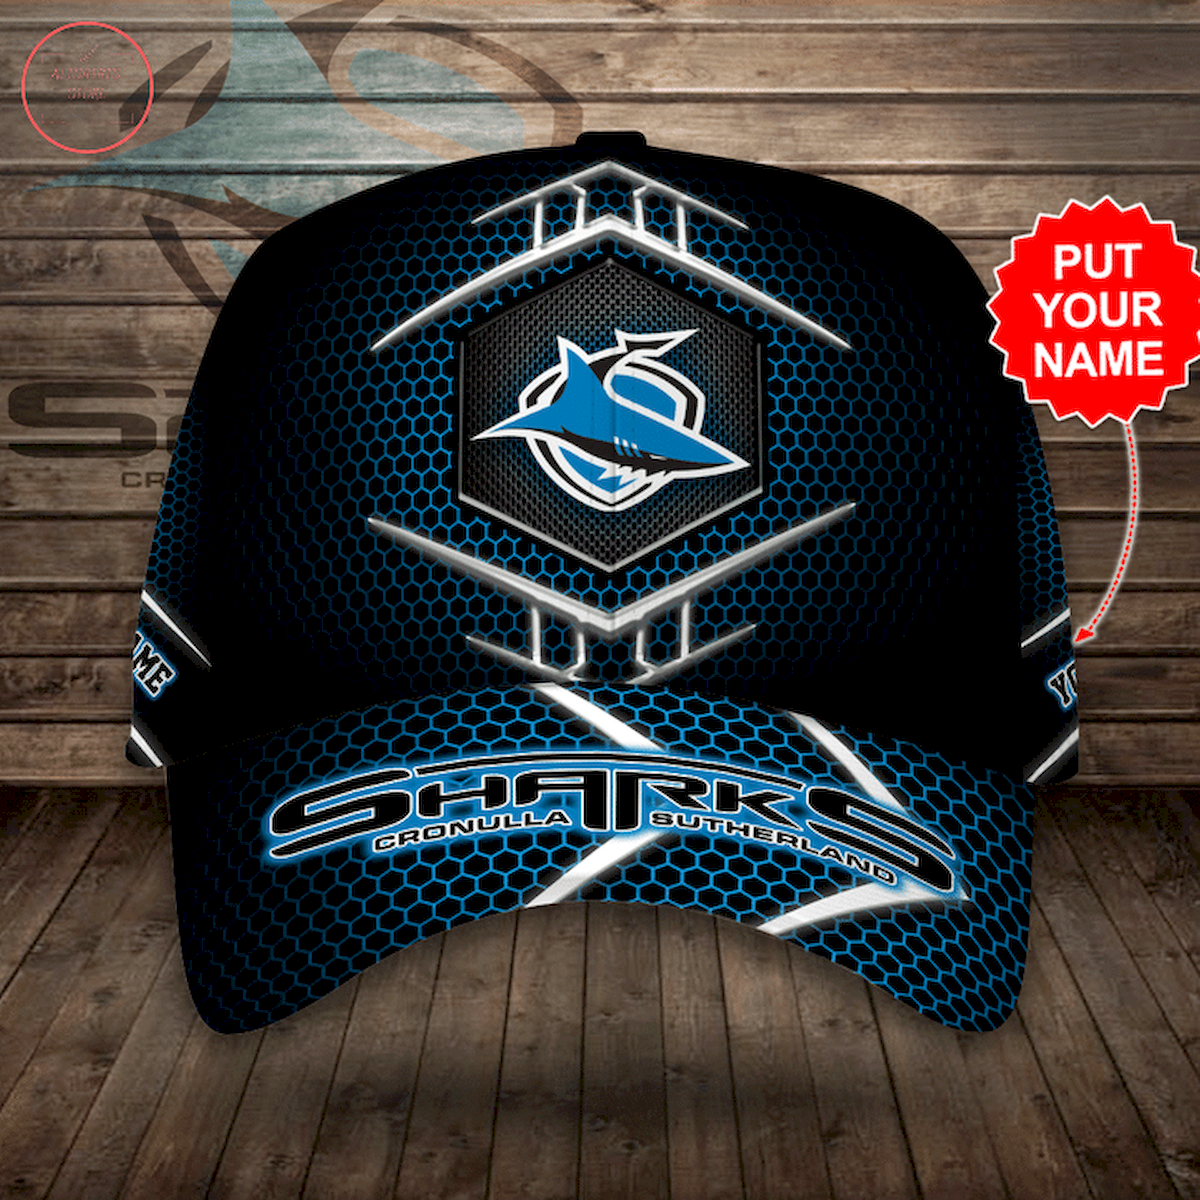 NRL Cronulla-Sutherland Sharks Personalized Hat Cap